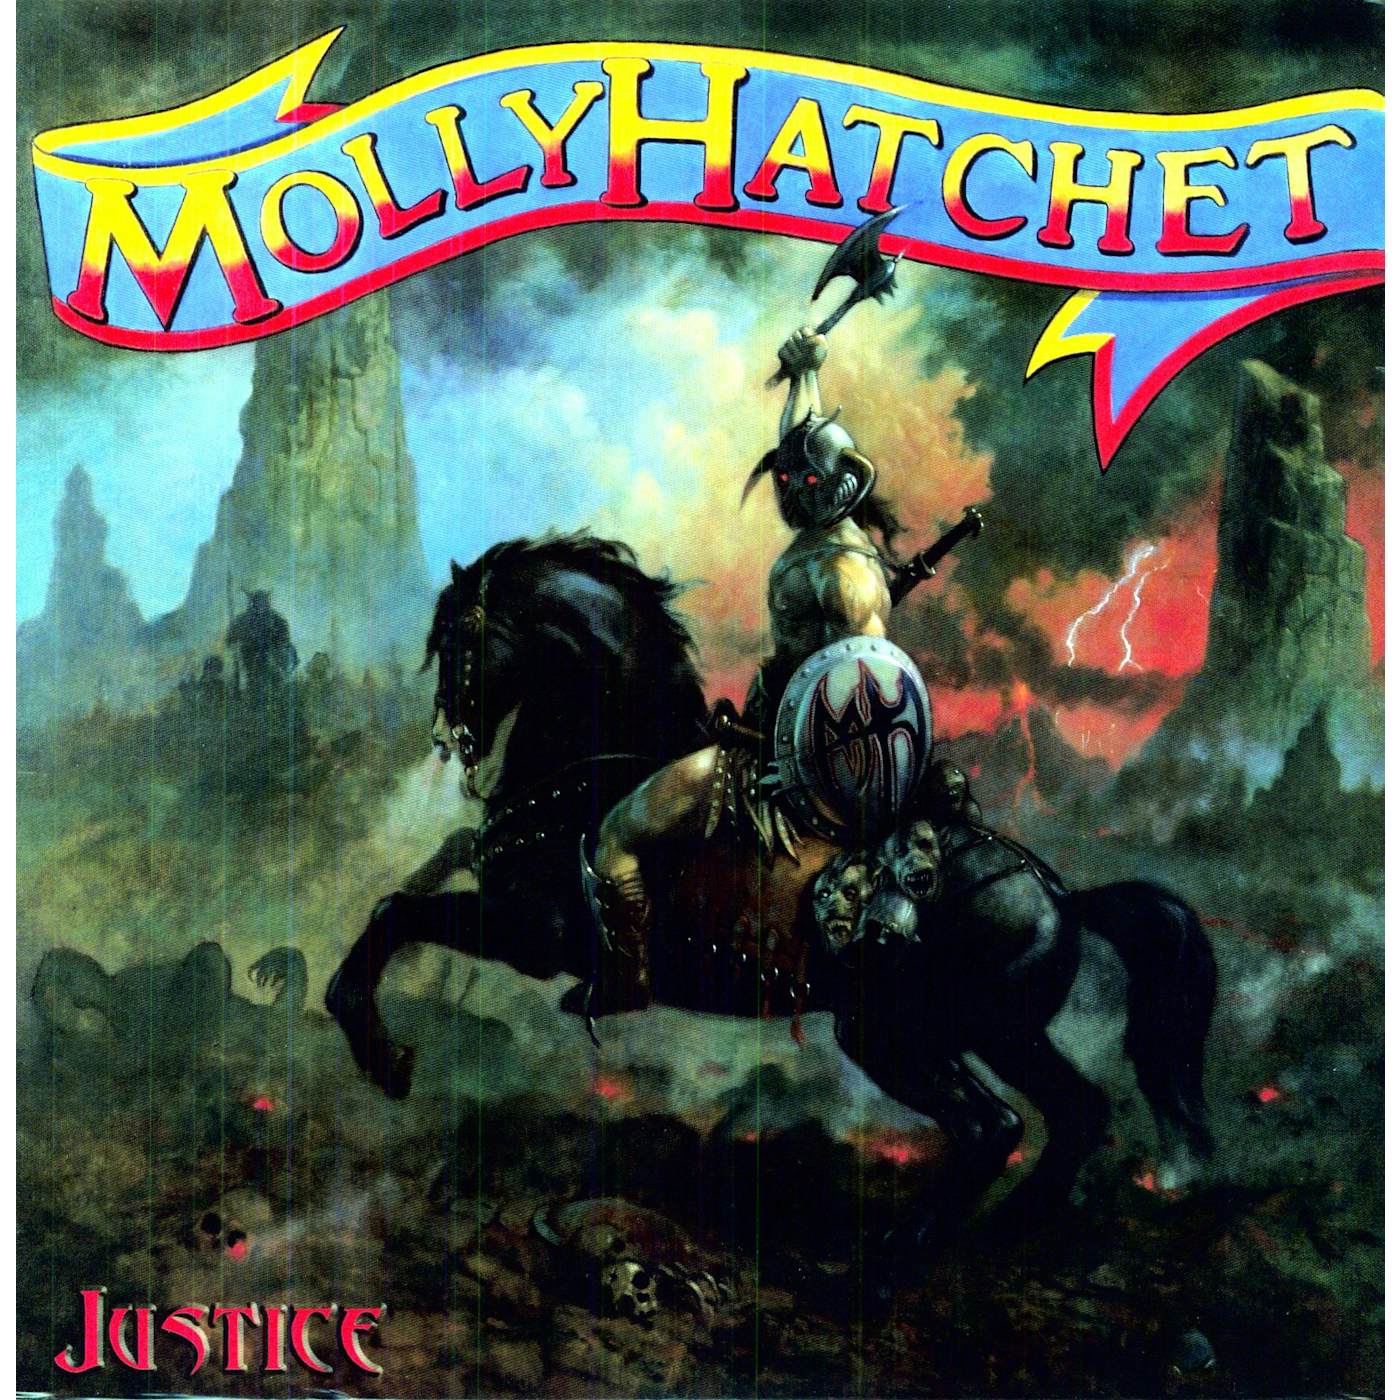 Molly Hatchet Justice Vinyl Record